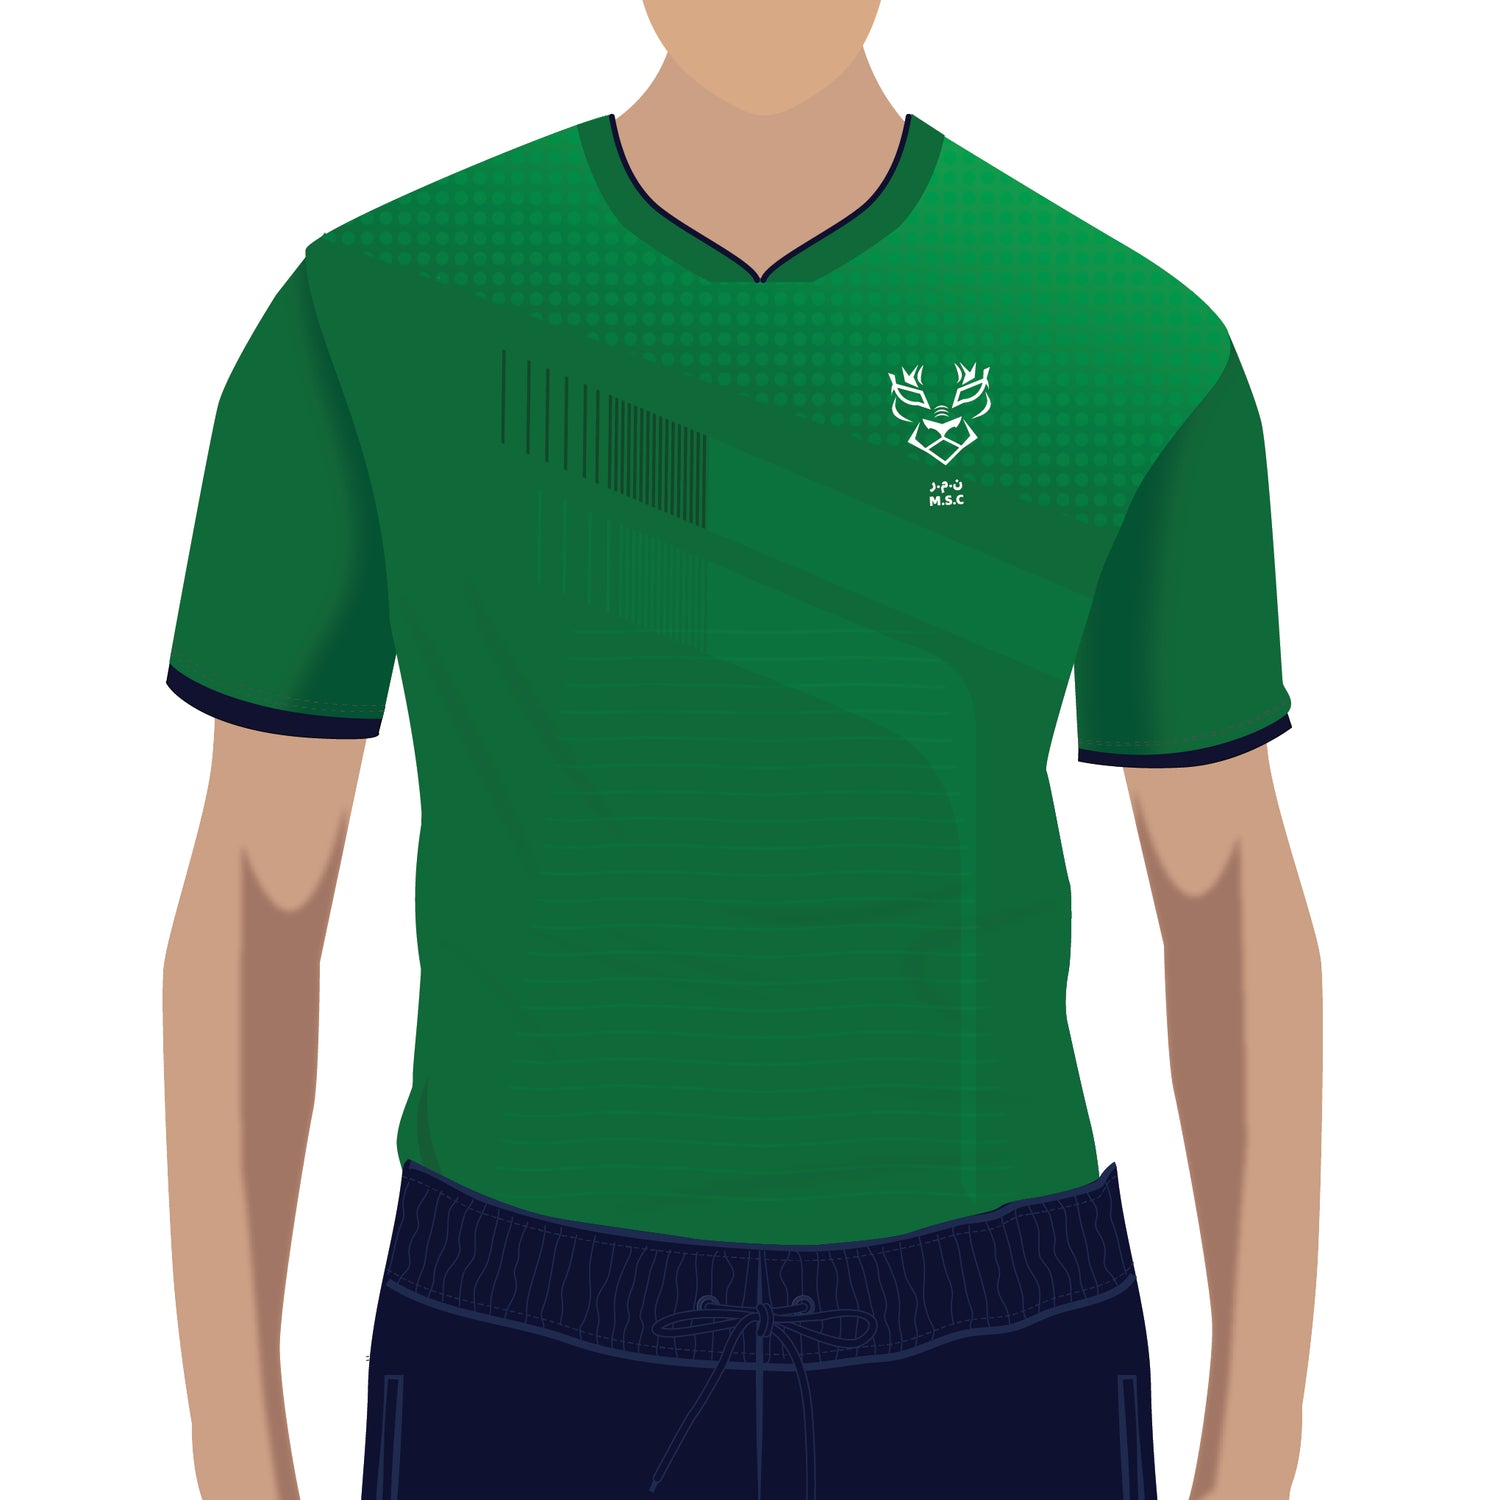 Al Maarif Pe Jersey T-shirt Green (All Grades)